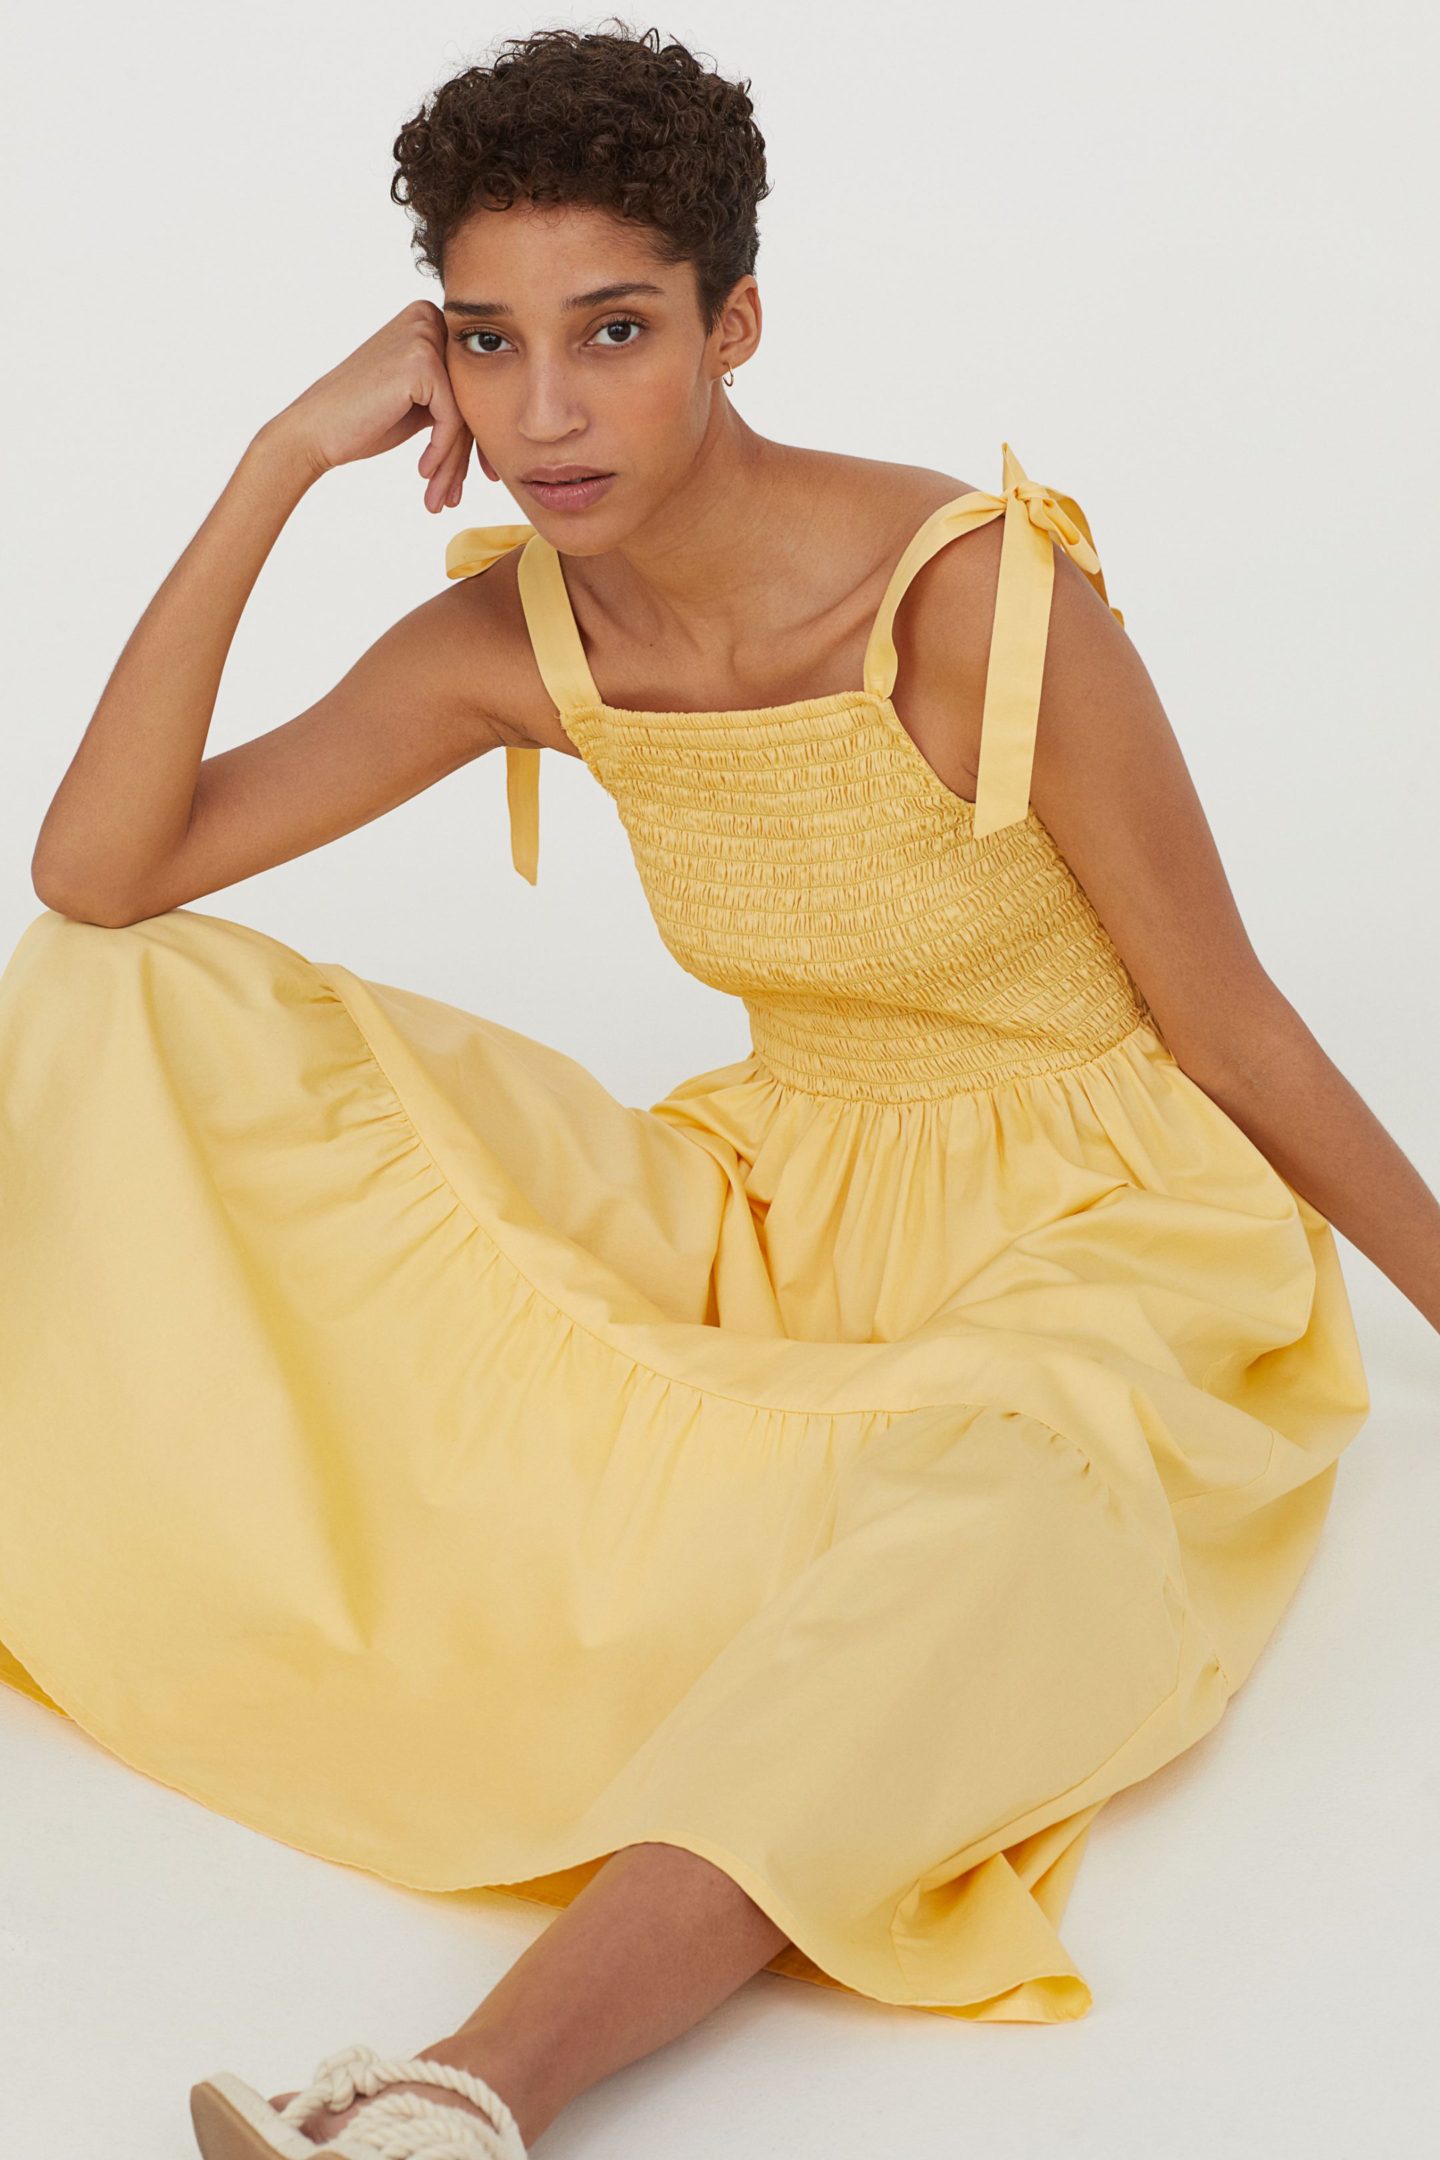 Womens Yellow Dress 1440x2160 